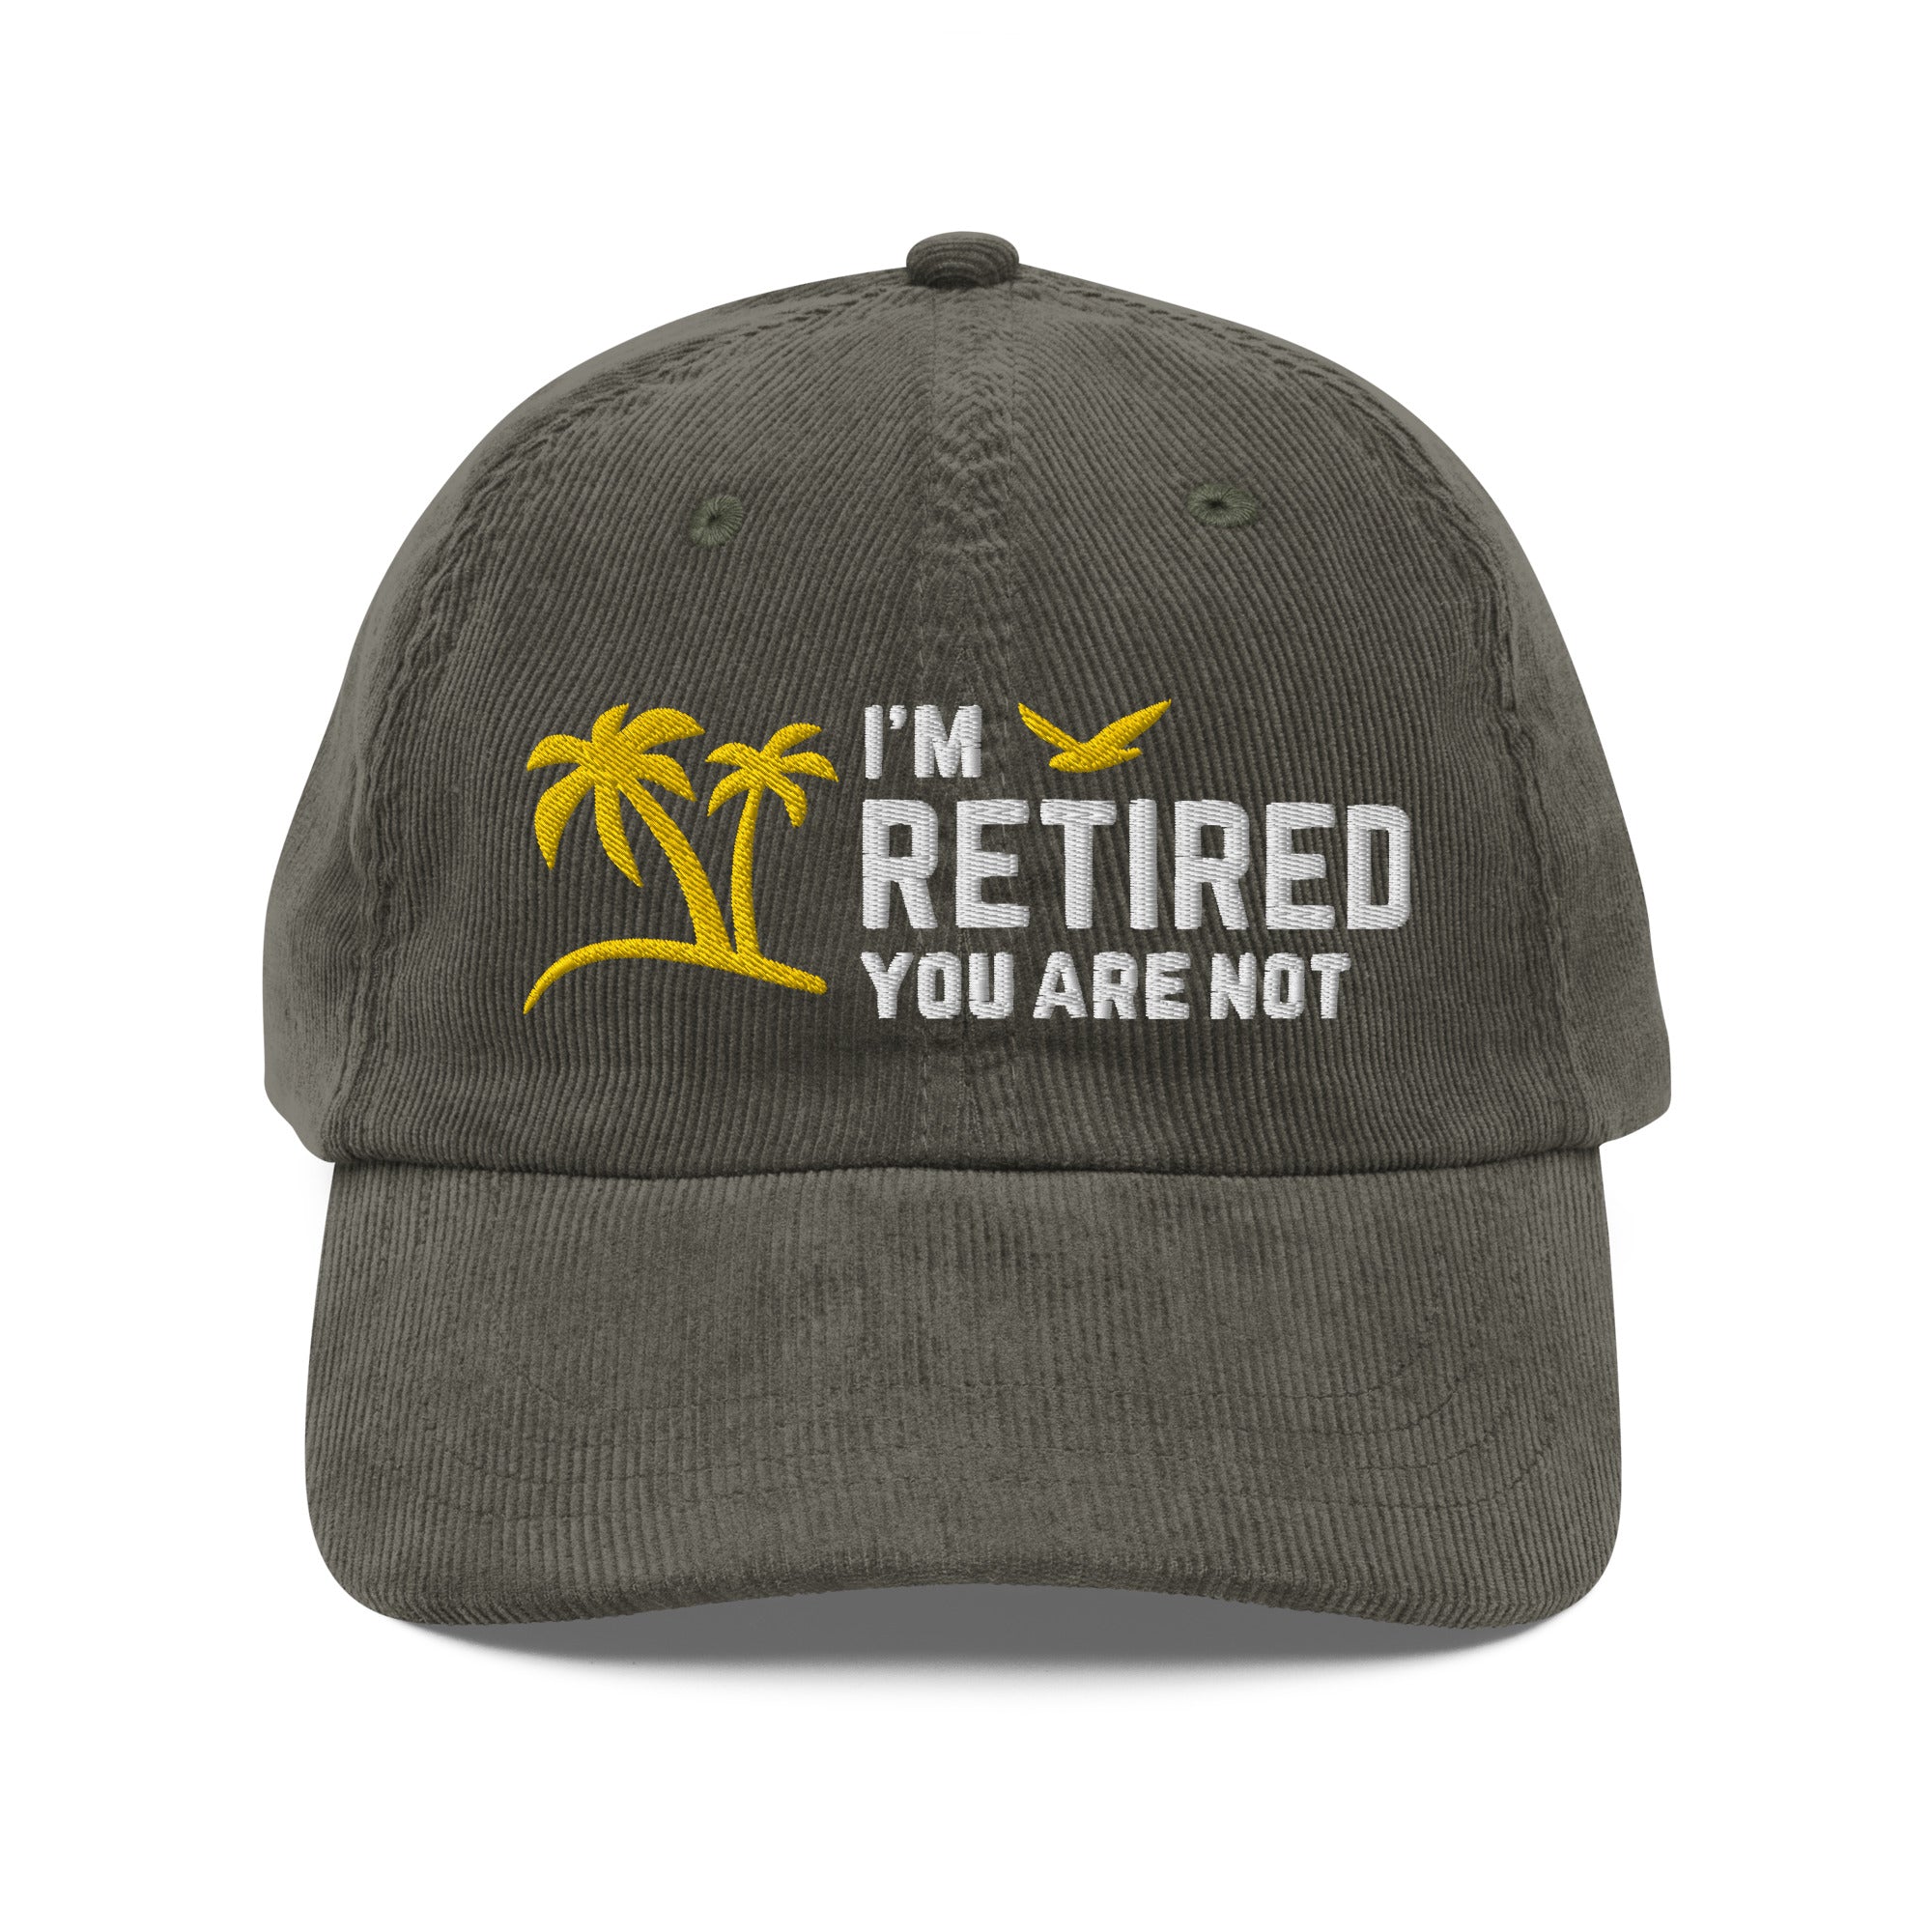 Funny & Humor Retired Hat